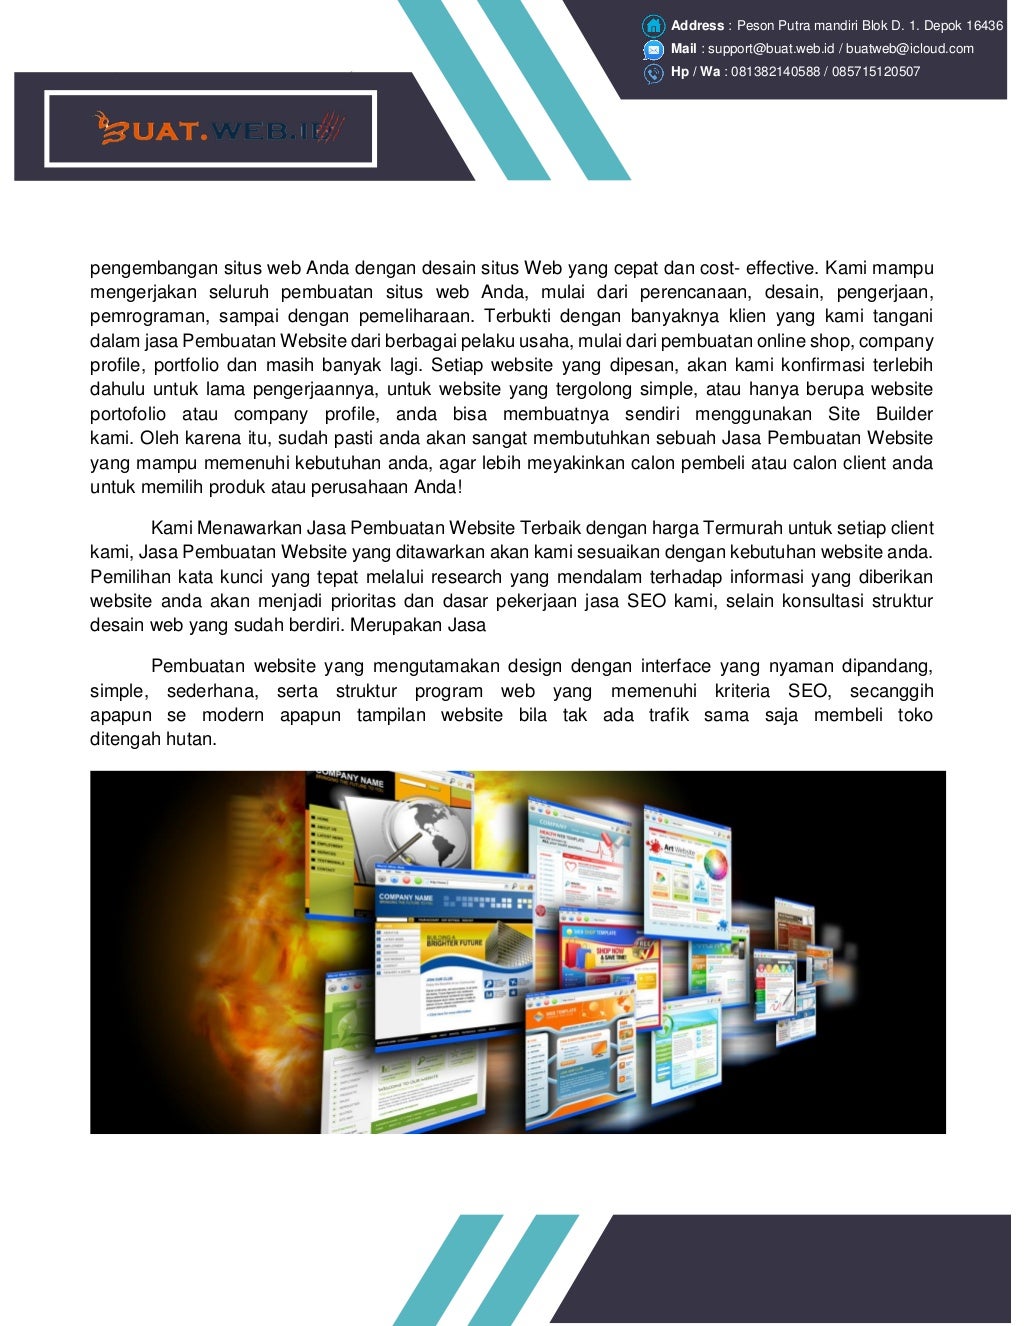 Harga Buat Web Company Profile